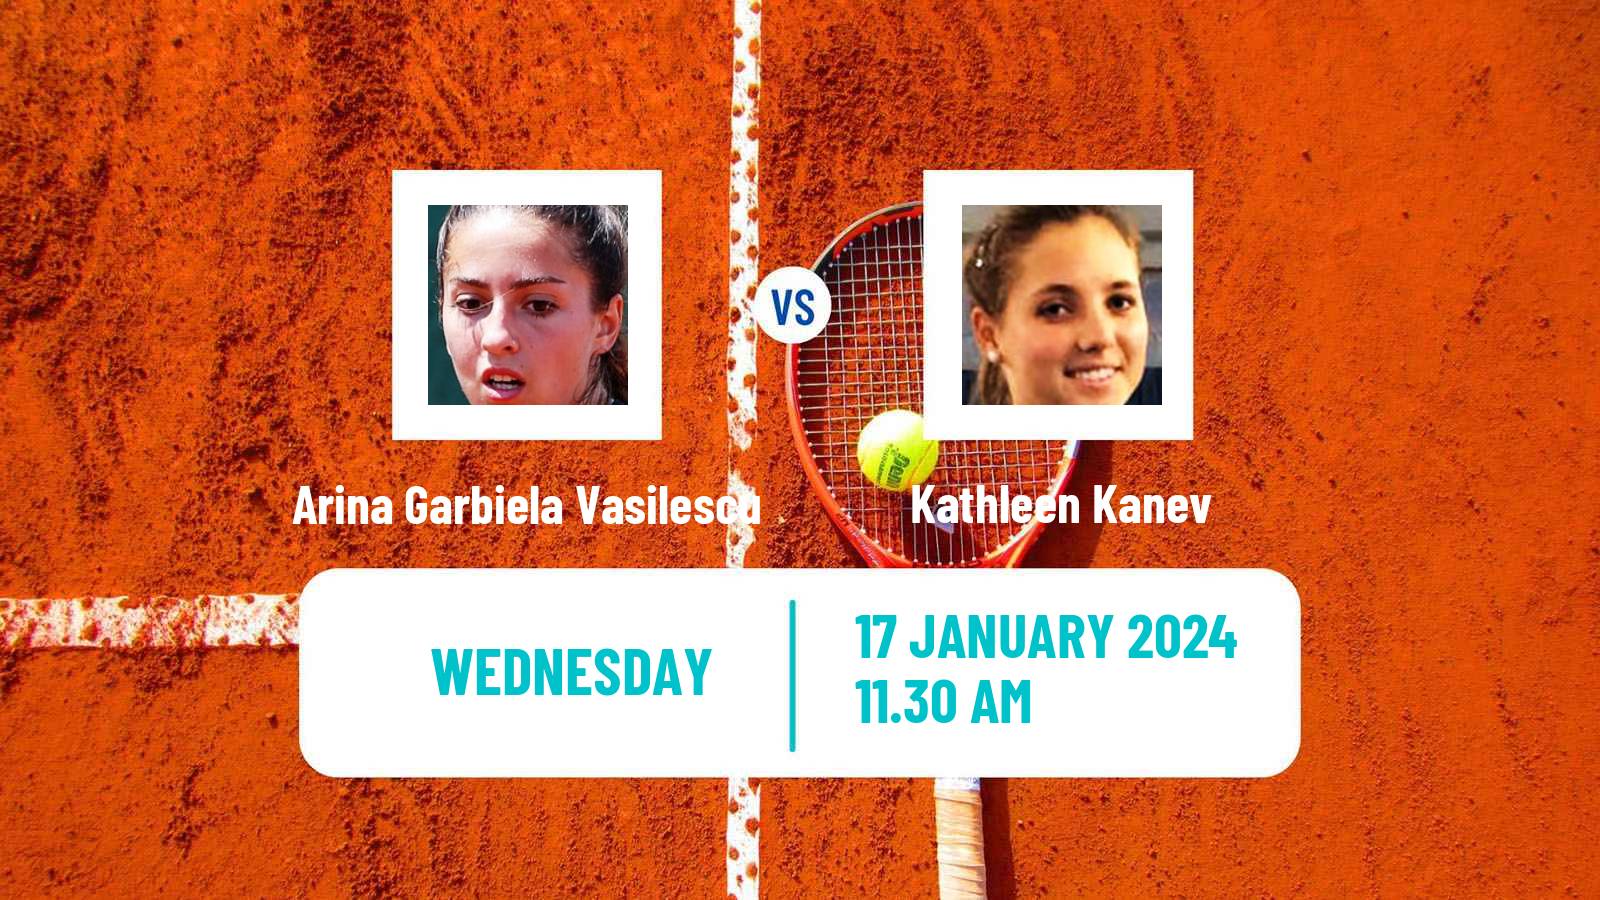 Tennis ITF W35 Naples Fl 2 Women Arina Garbiela Vasilescu - Kathleen Kanev